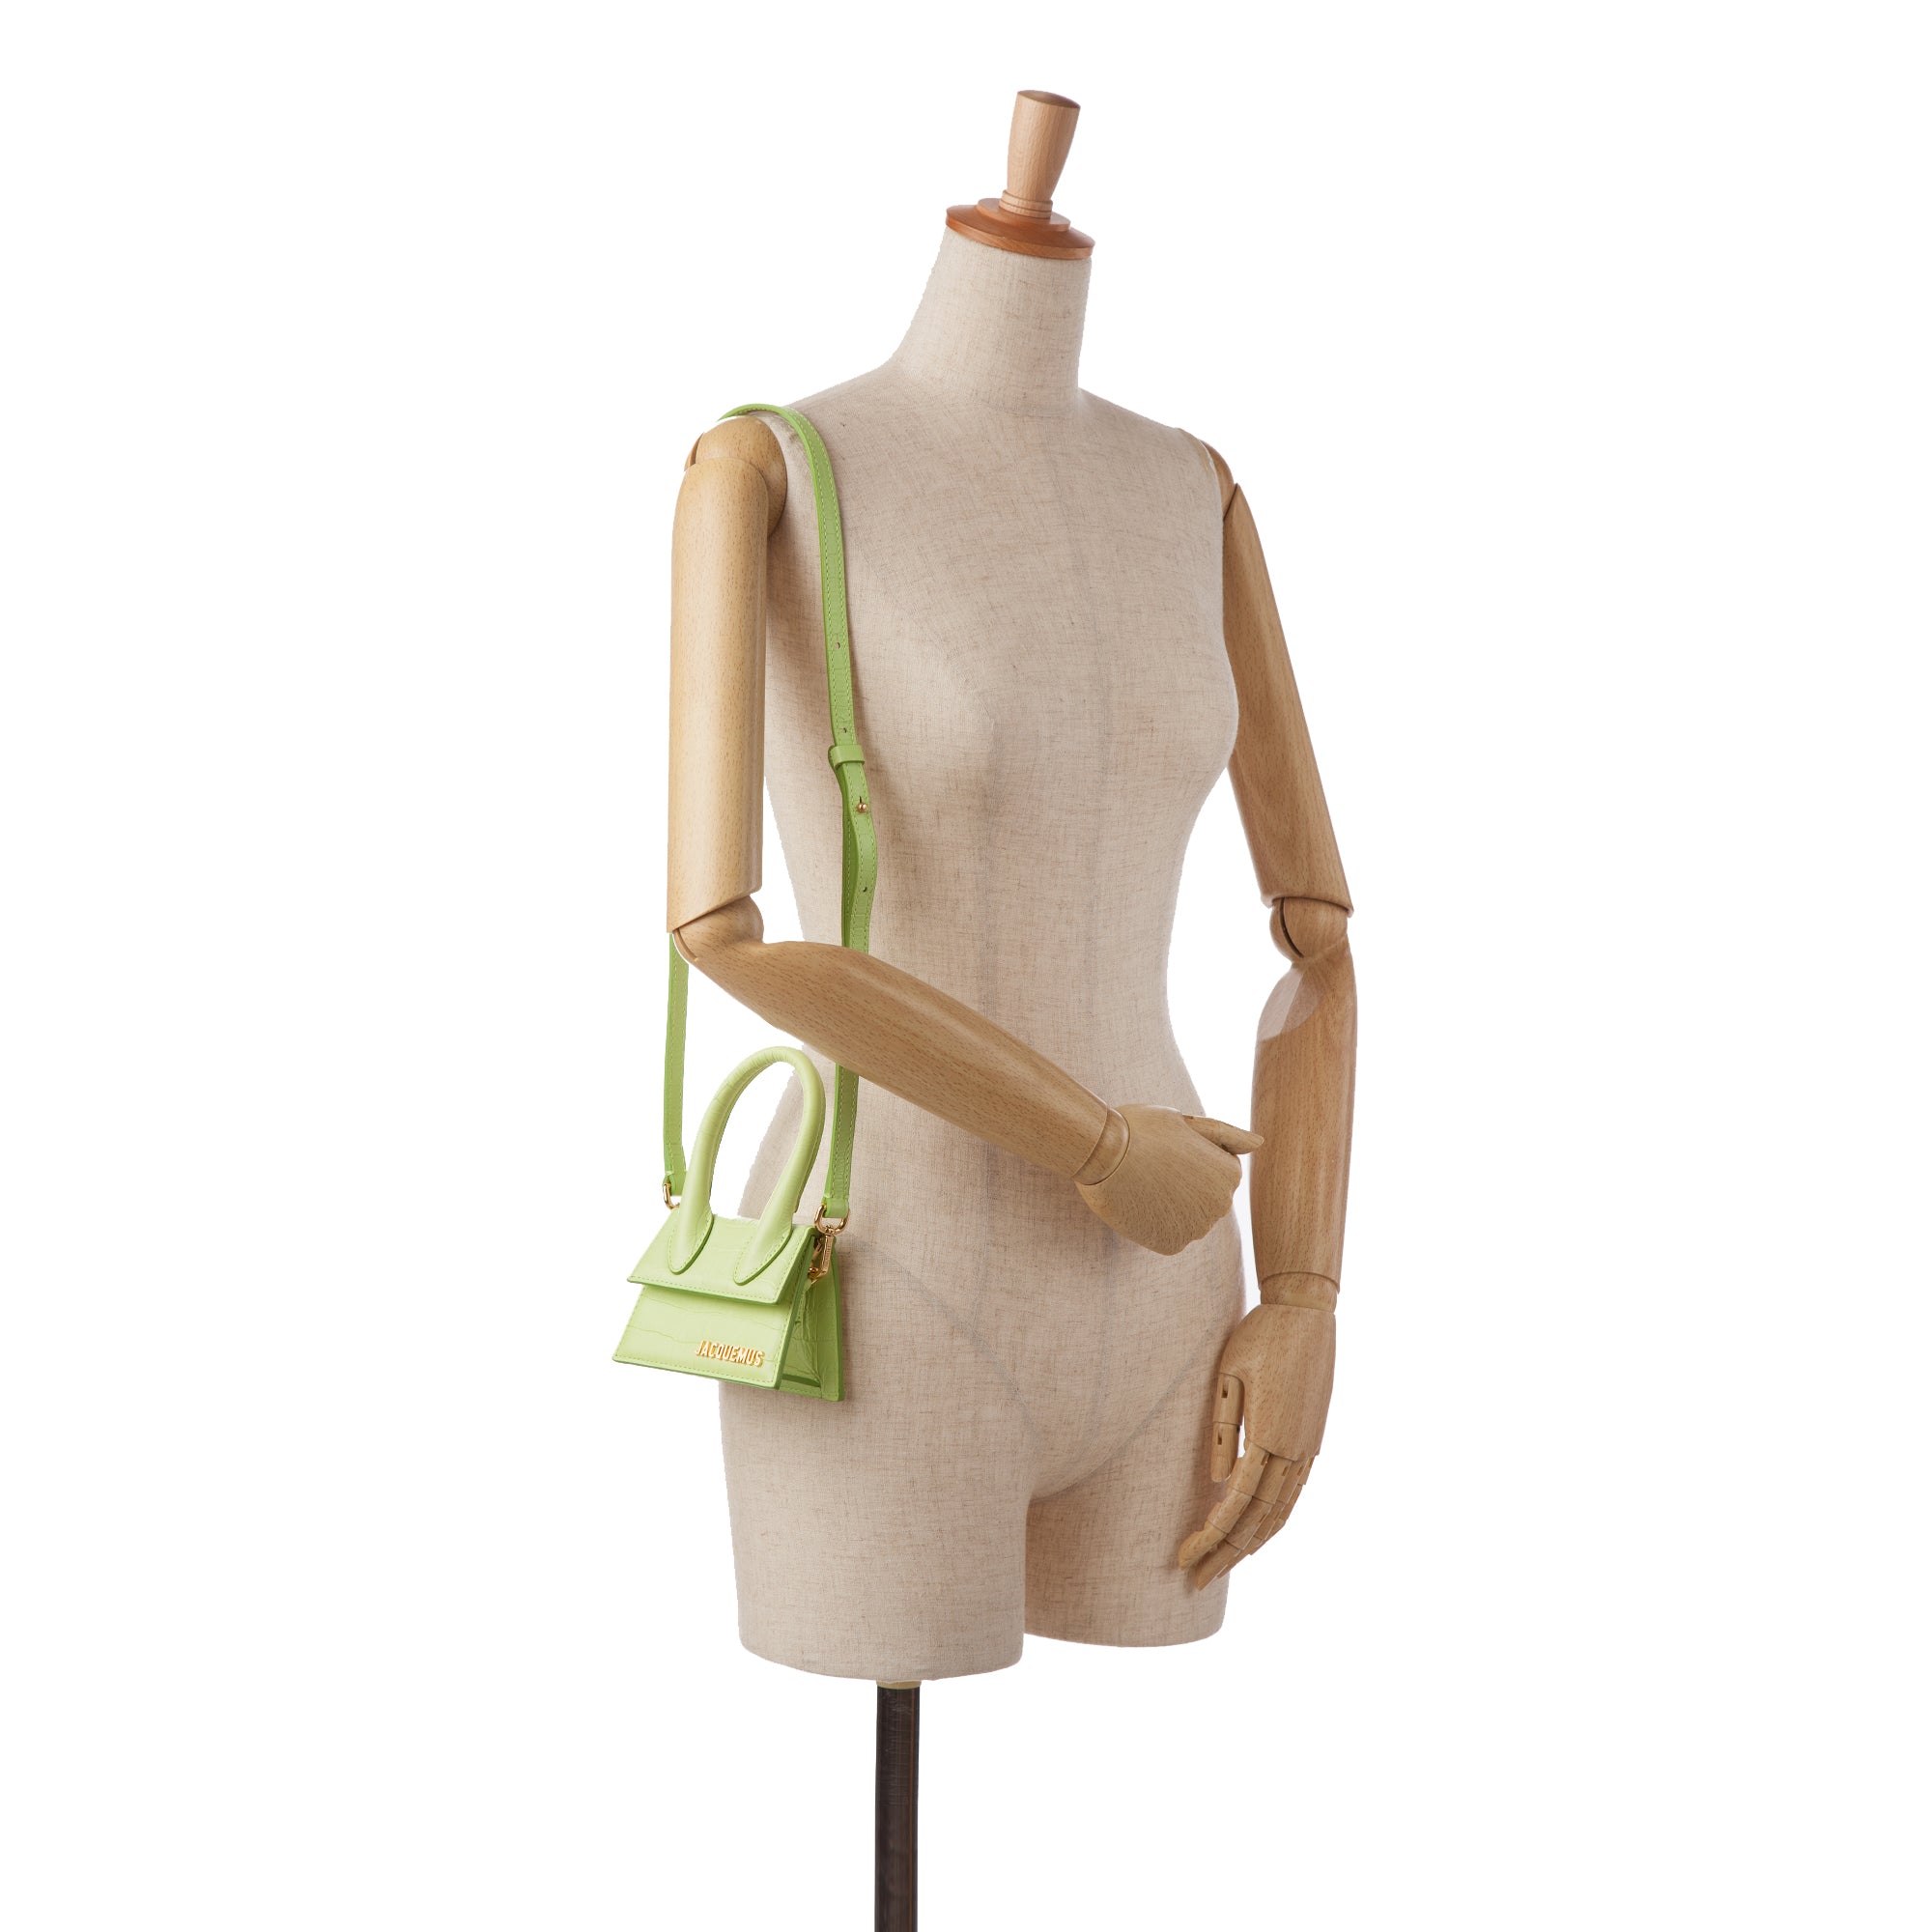 Green Jacquemus Le Chiquito Embossed Leather Bag Satchel - Designer Revival